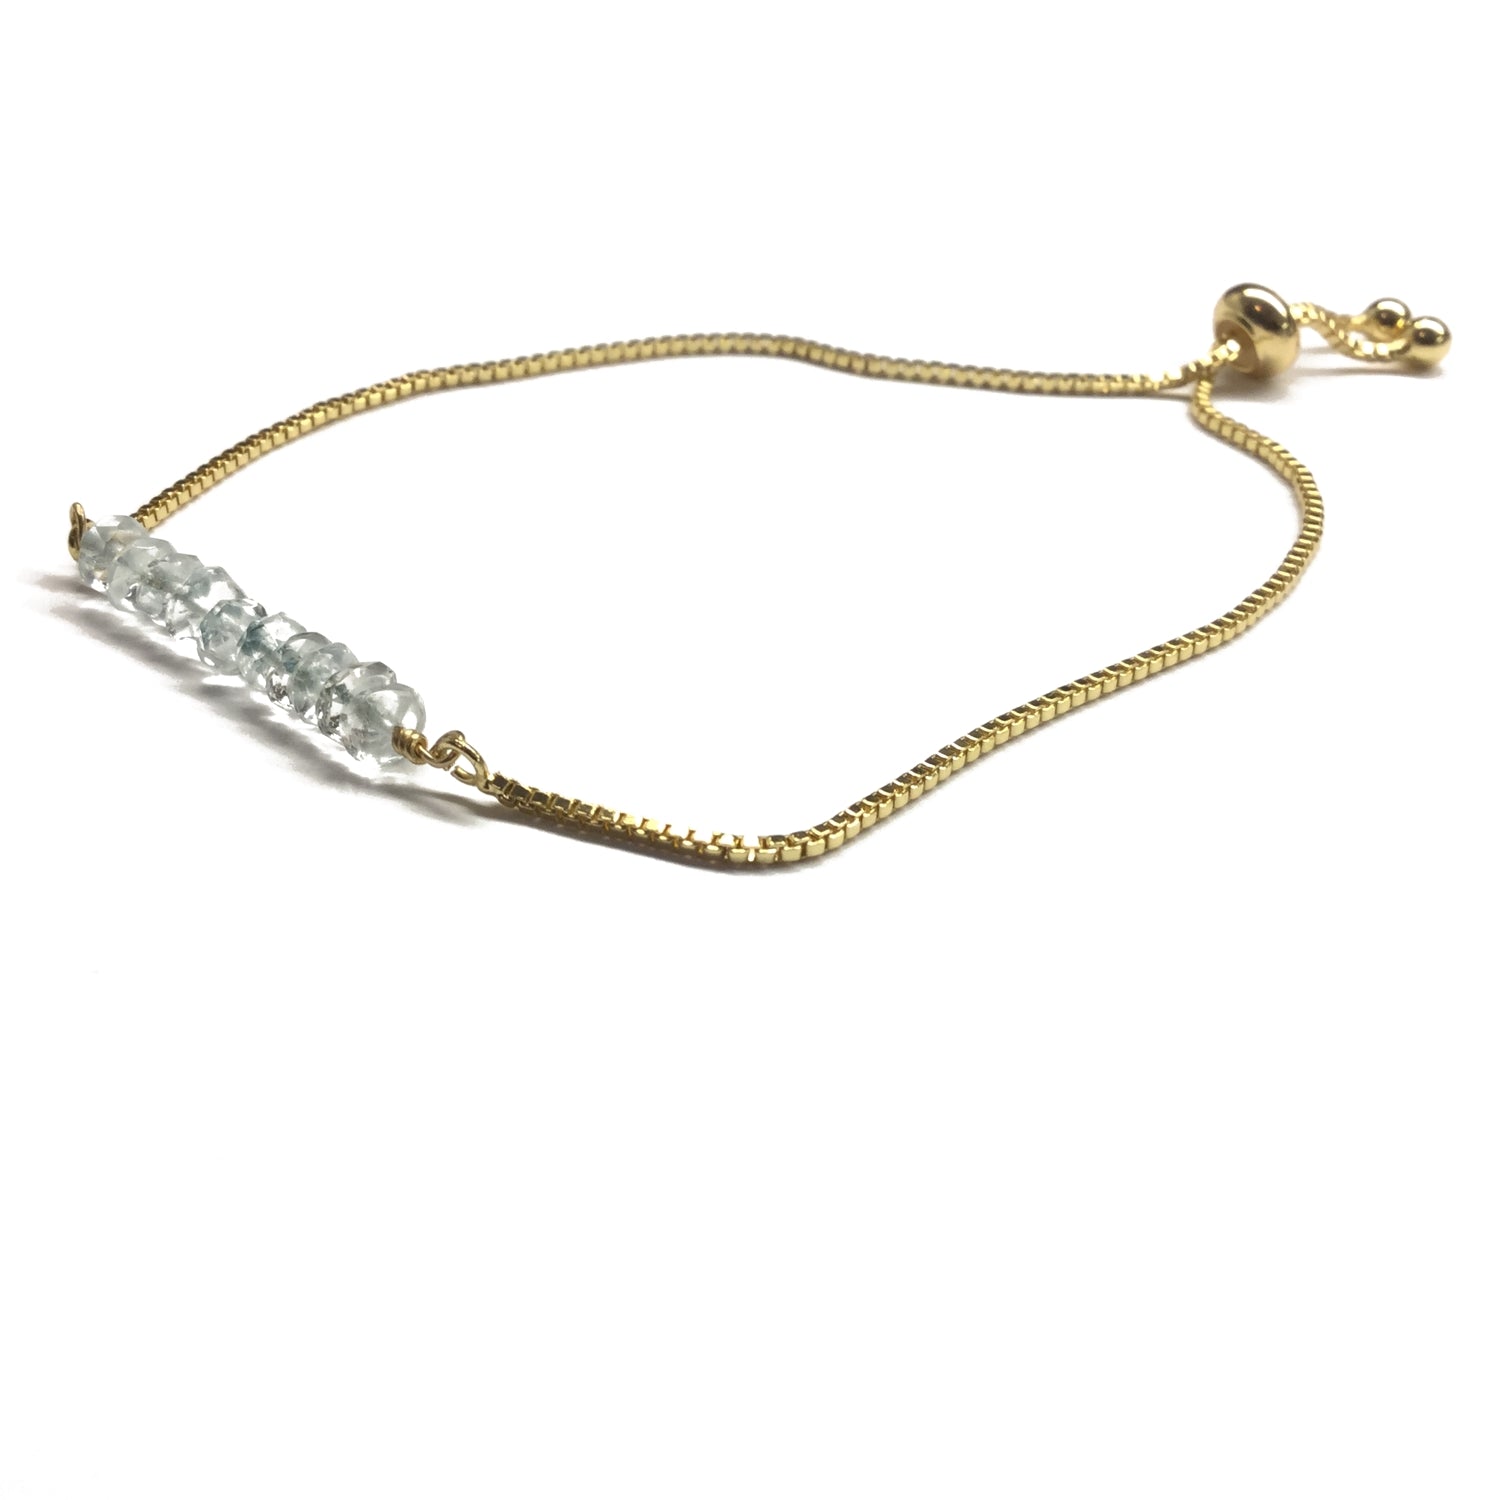 Natural blue aquamarine gemstone bar gold stainless steel box chain adjustable bracelet